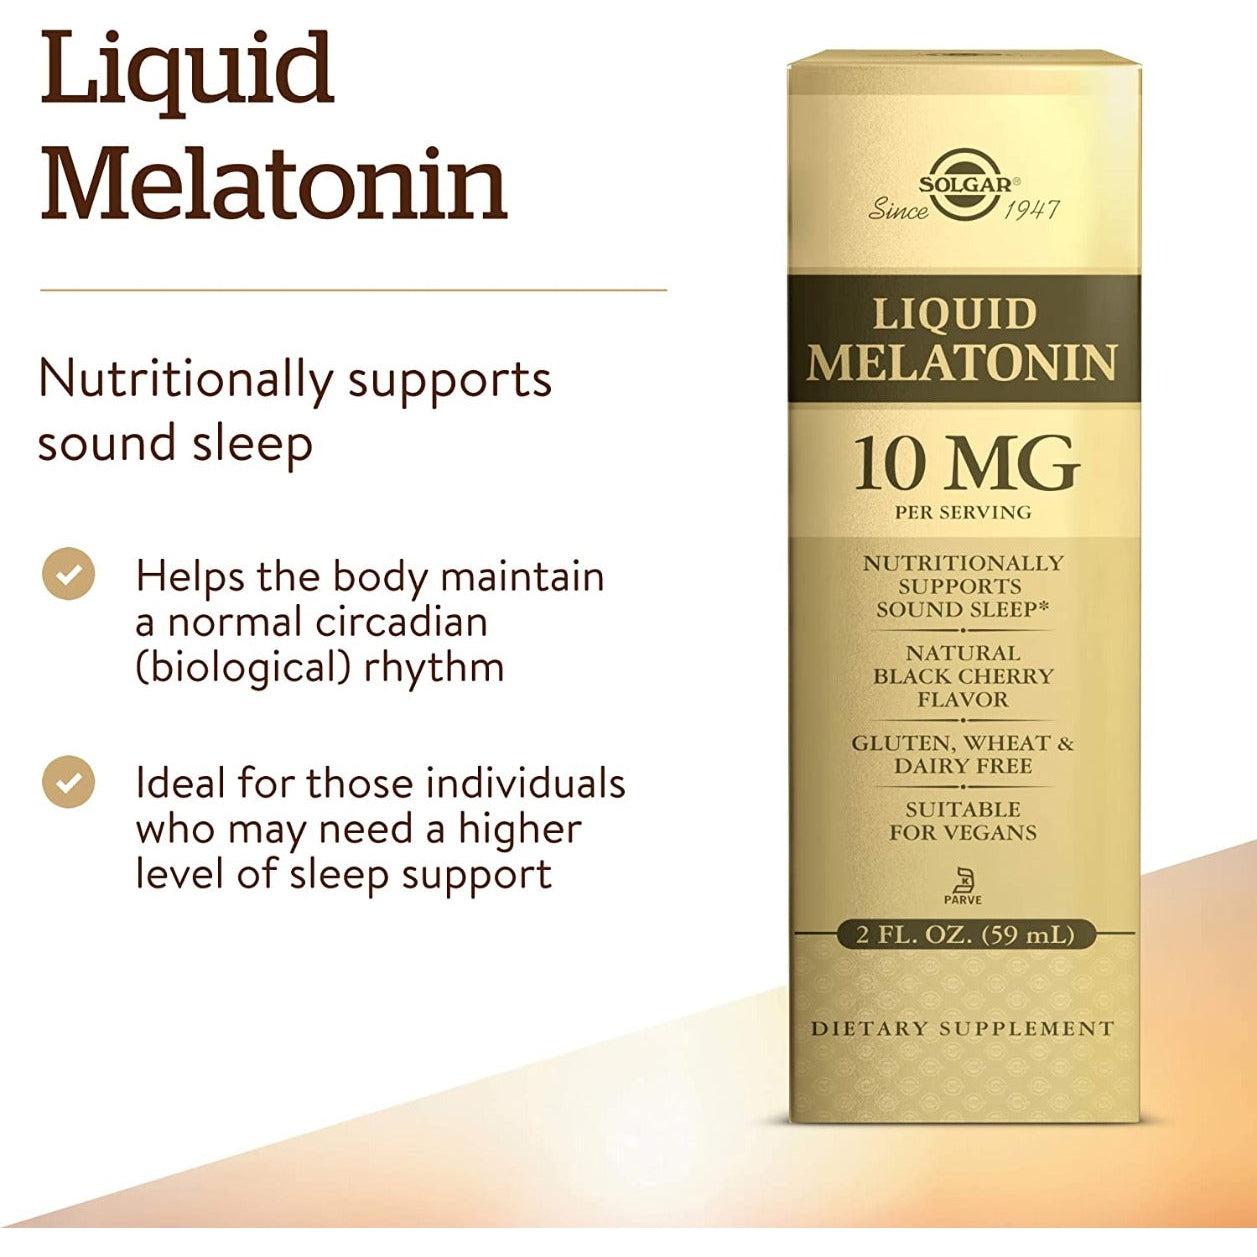 Solgar Liquid Melatonin 10mg with Natural Black Cherry Flavor 59ml